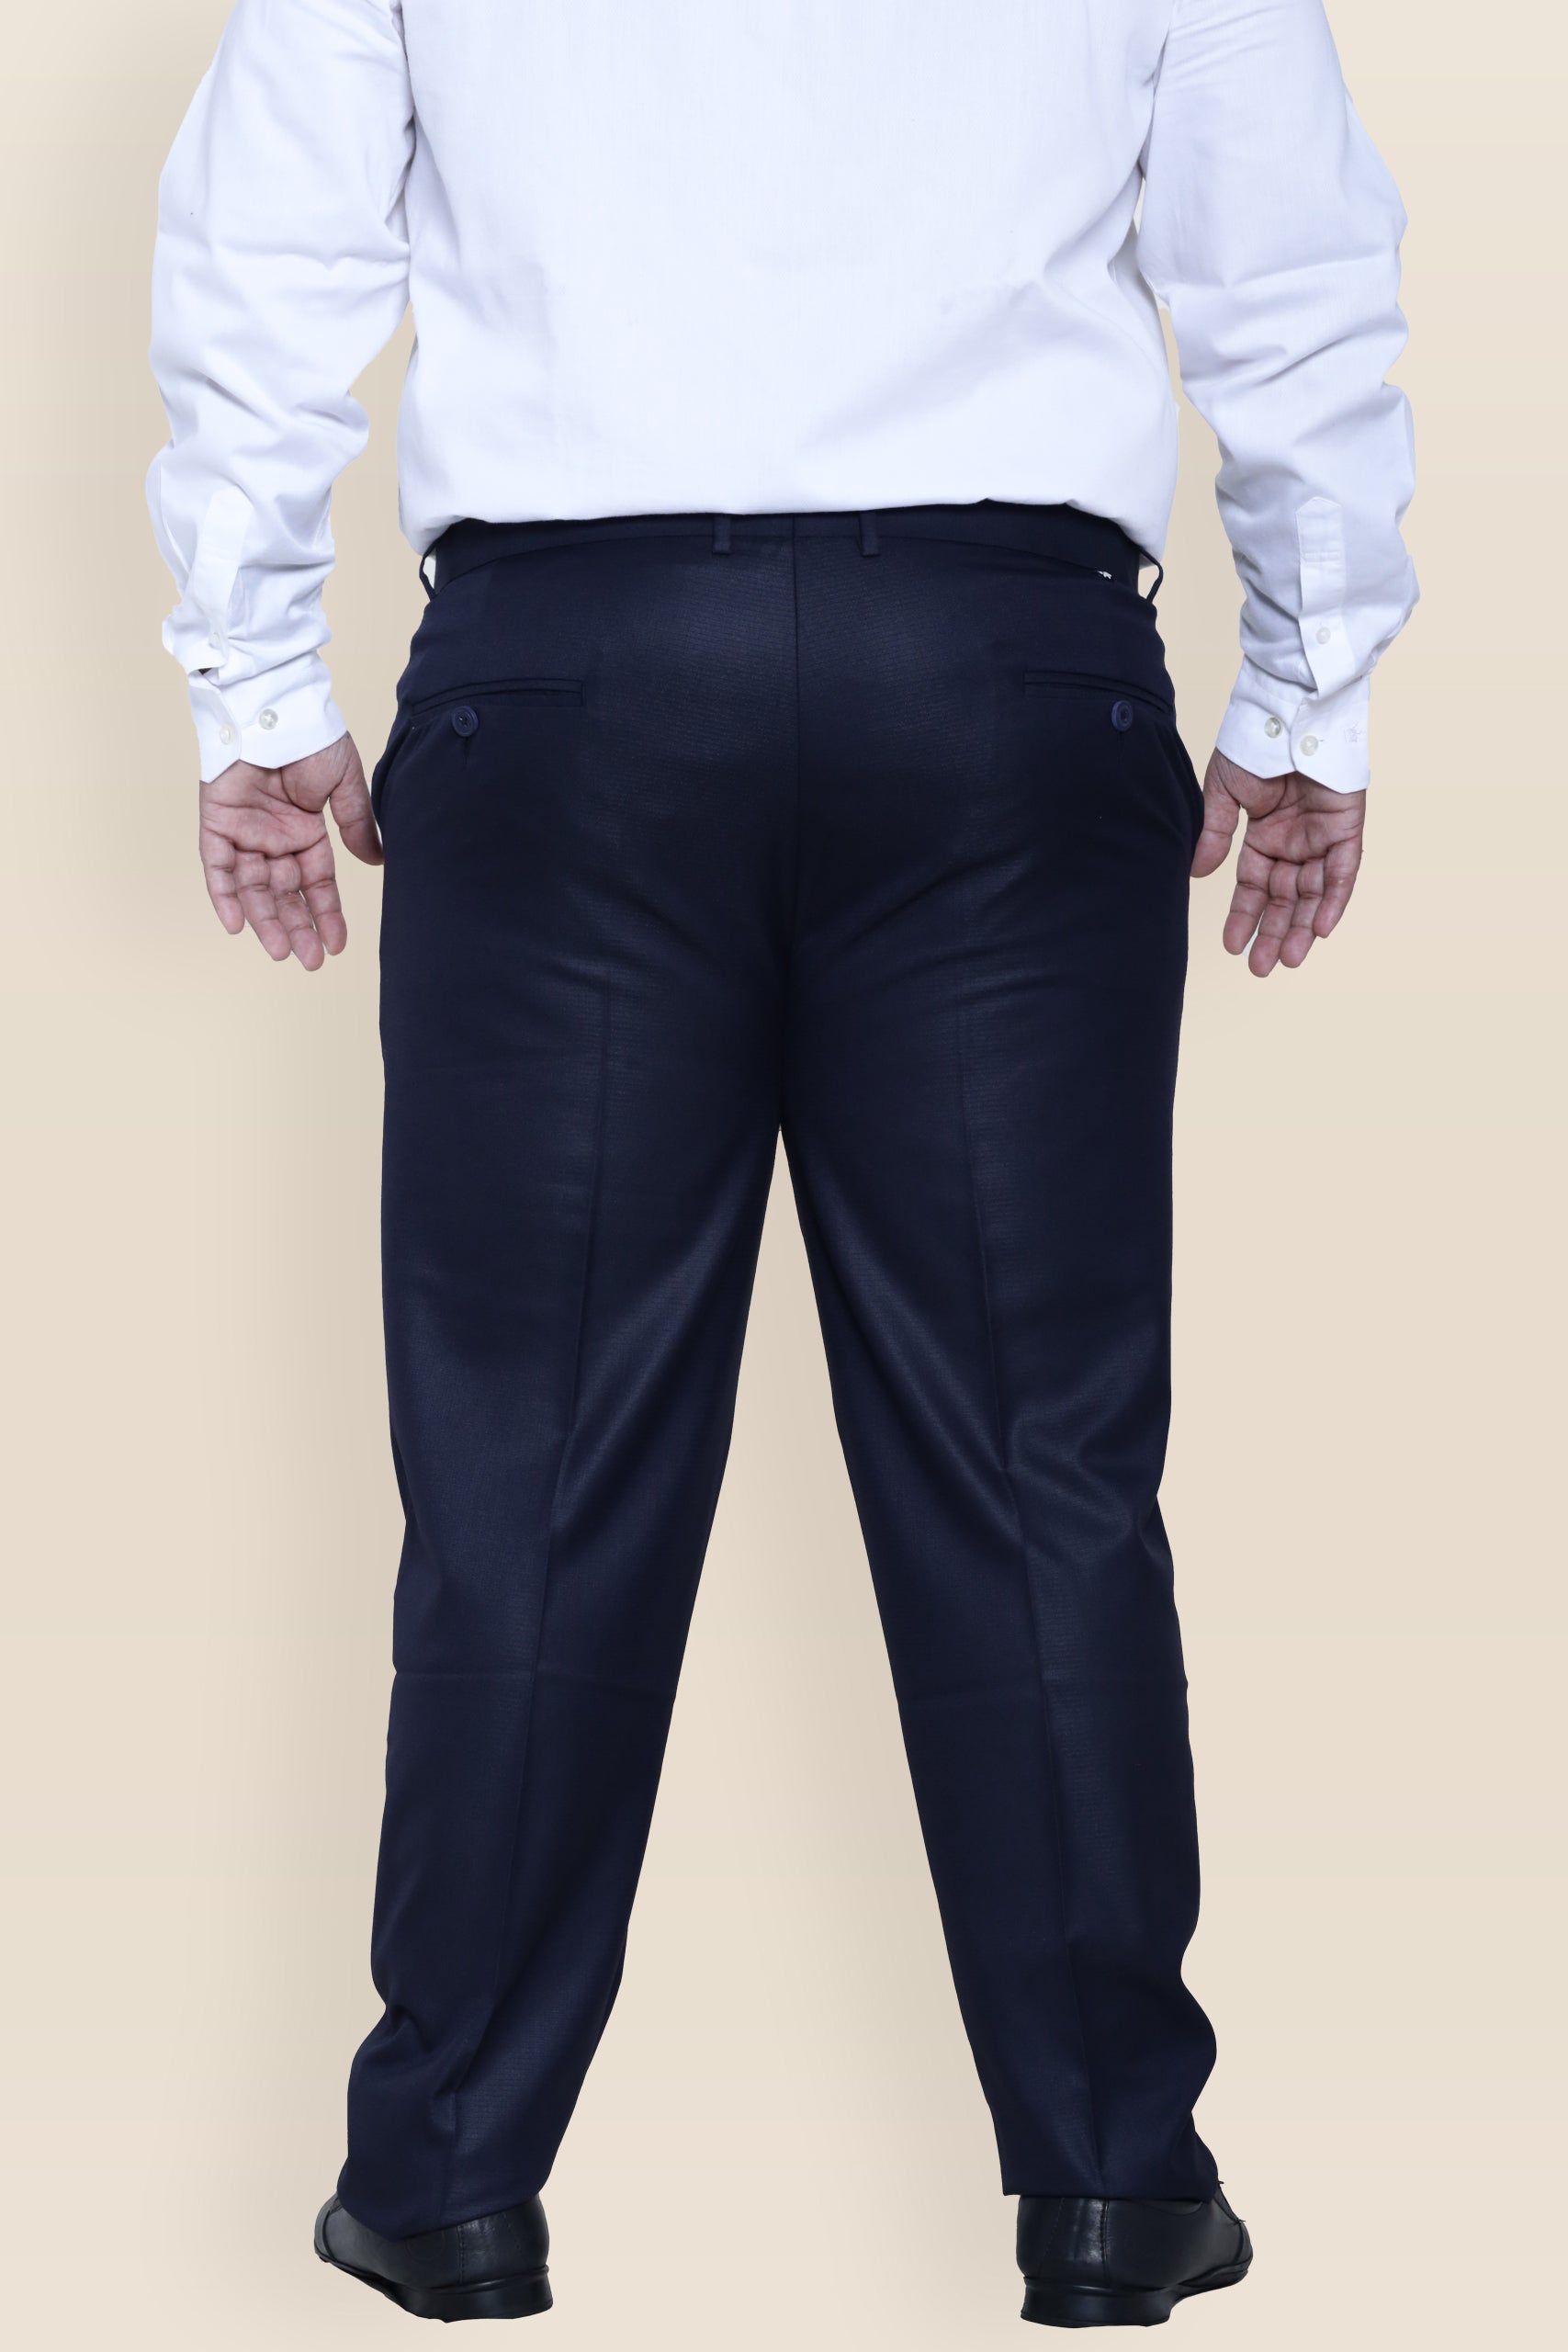 Flexiplus Pant For Men Limited Edition